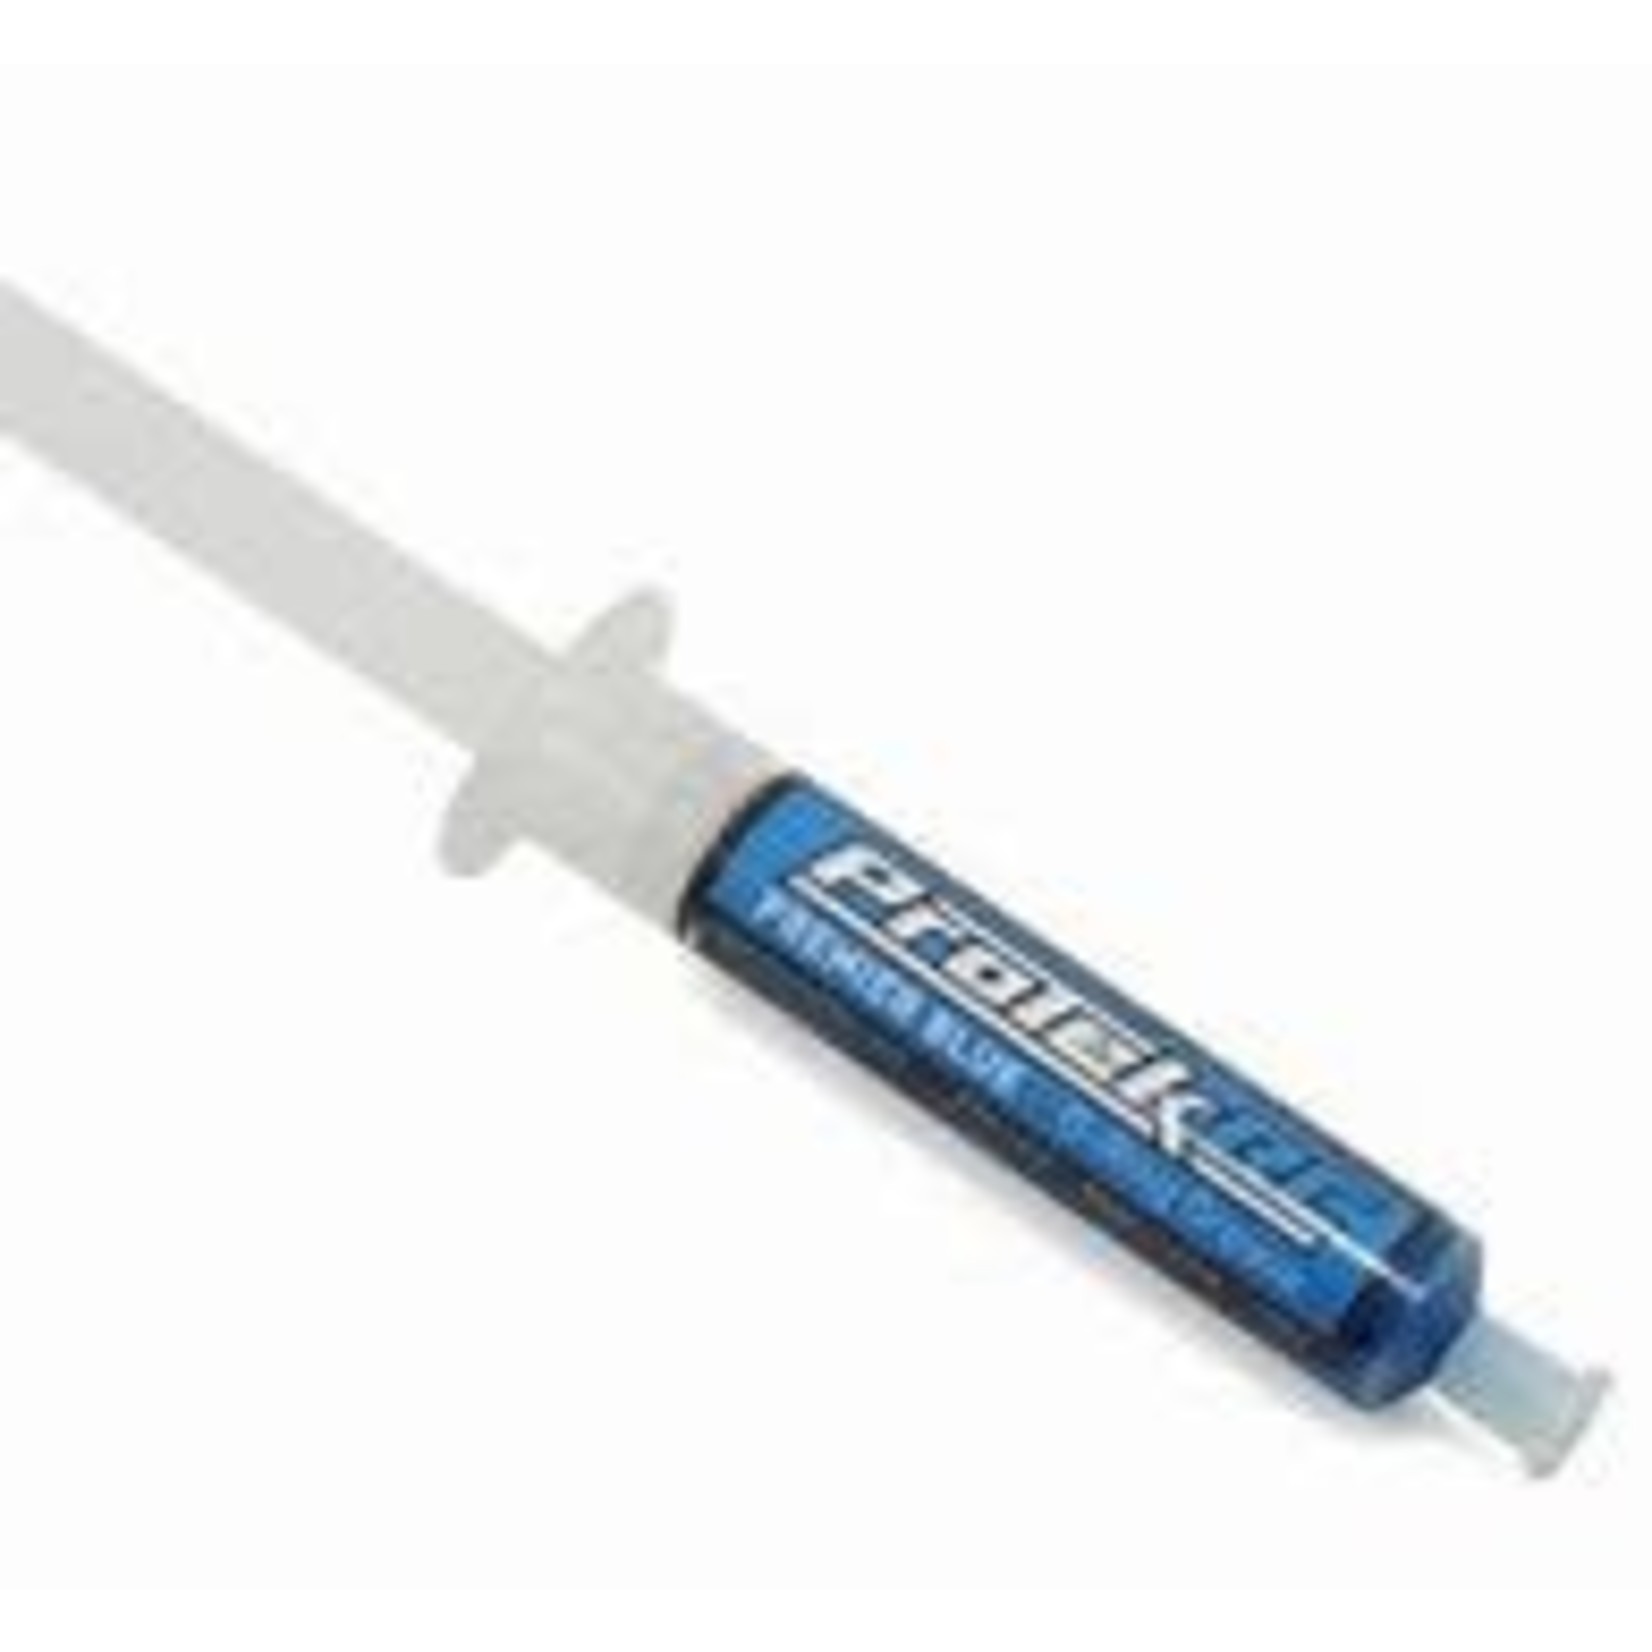 ProTek RC ProTek RC "Premier Blue" O-Ring Grease & Multipurpose Lubricant (10ml)